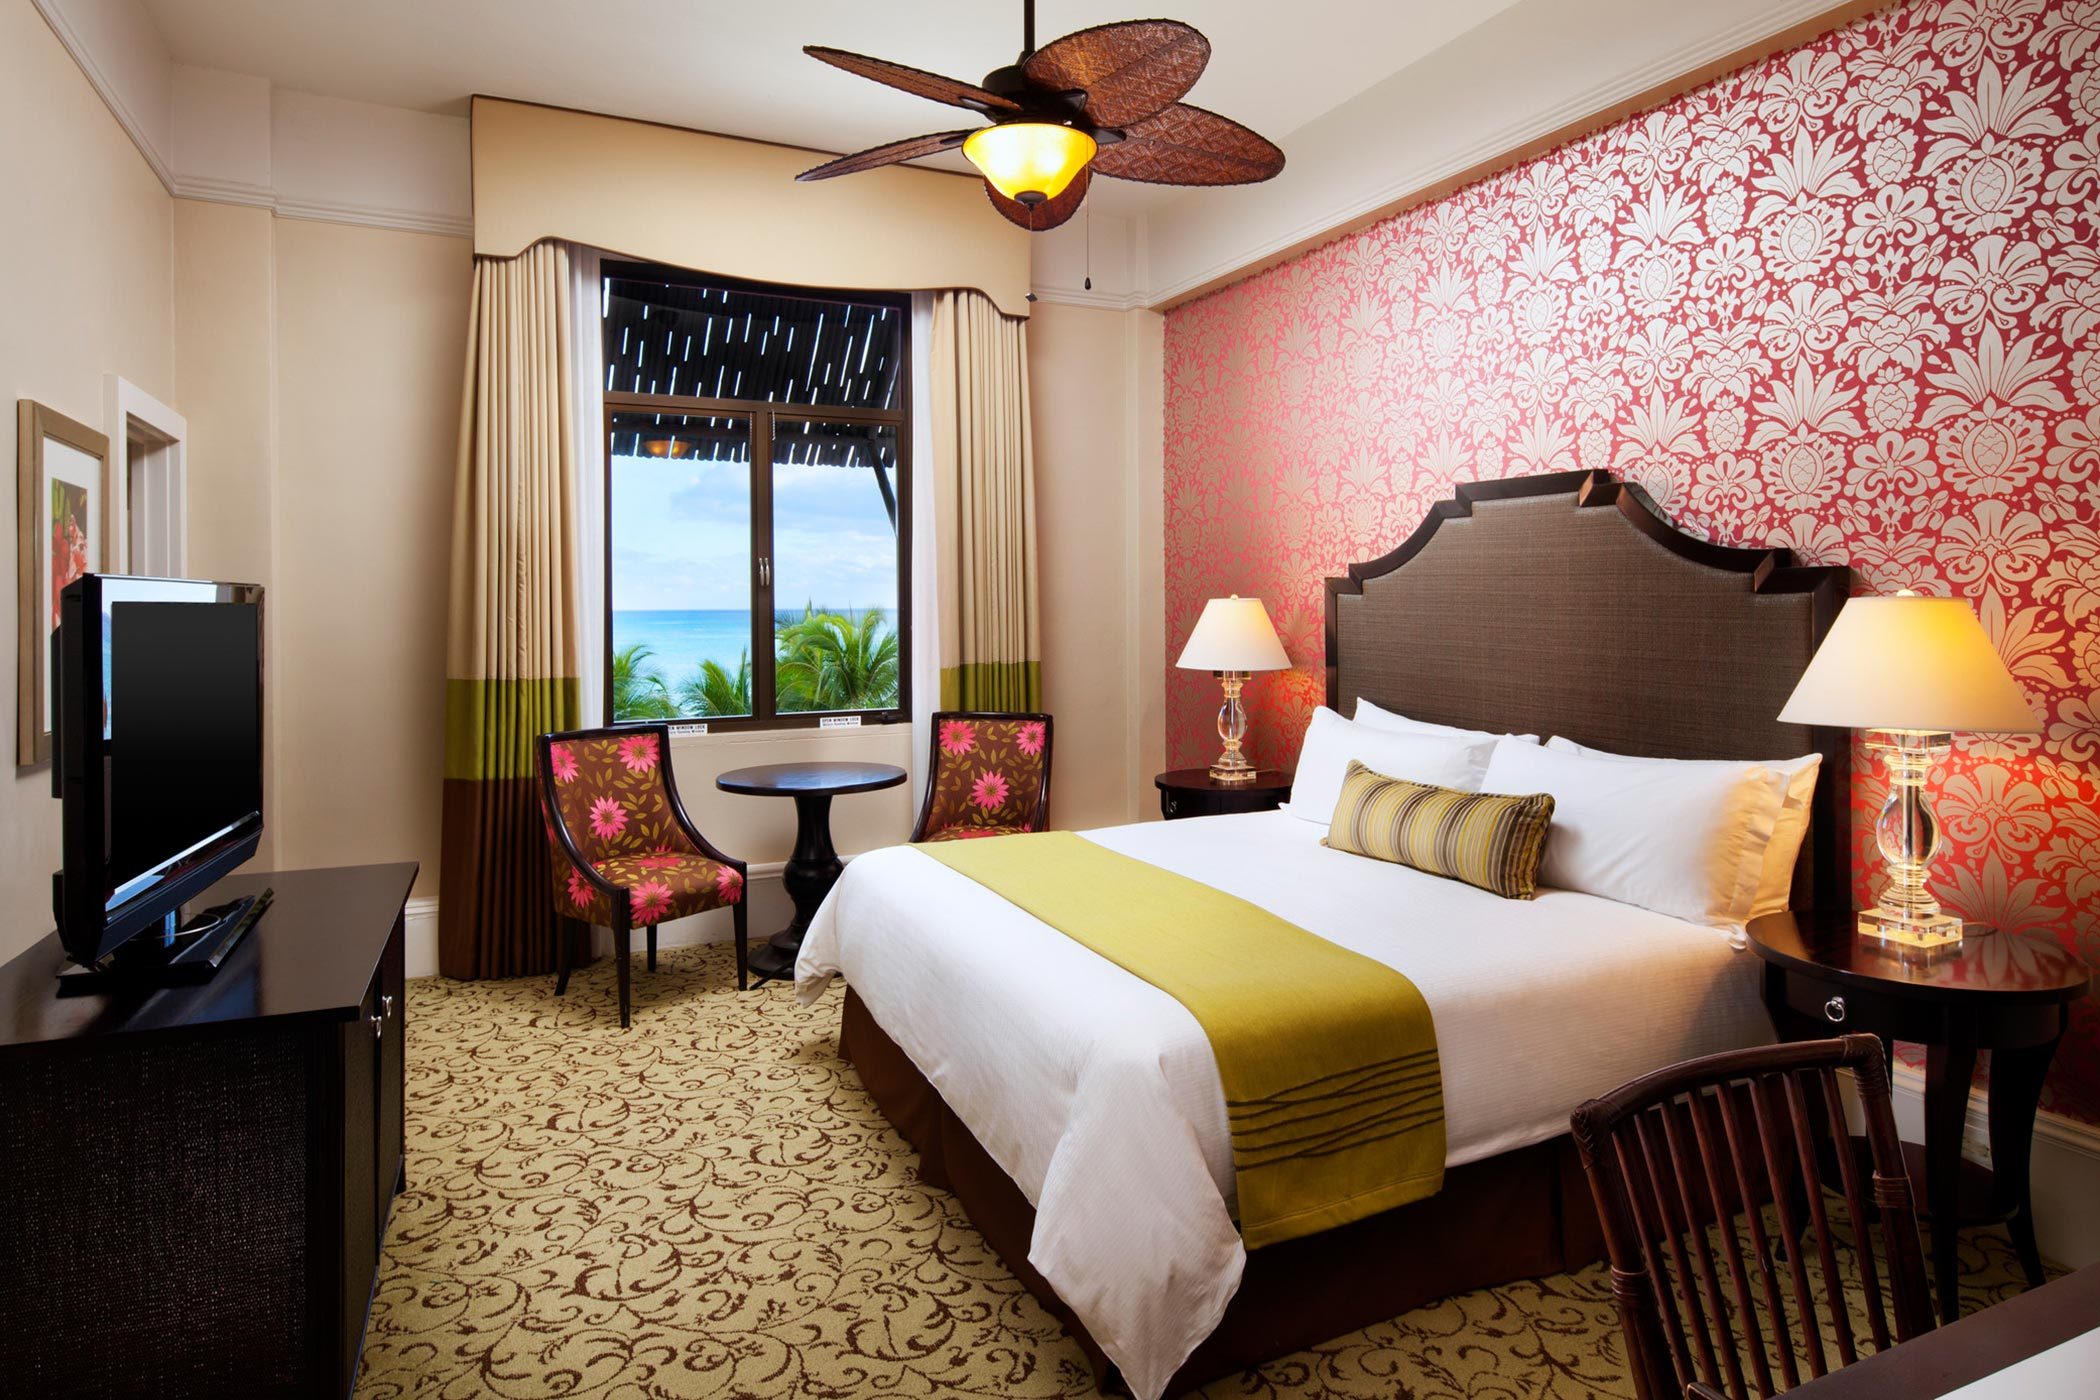 hotel wallpaper designs,bedroom,room,furniture,bed,property